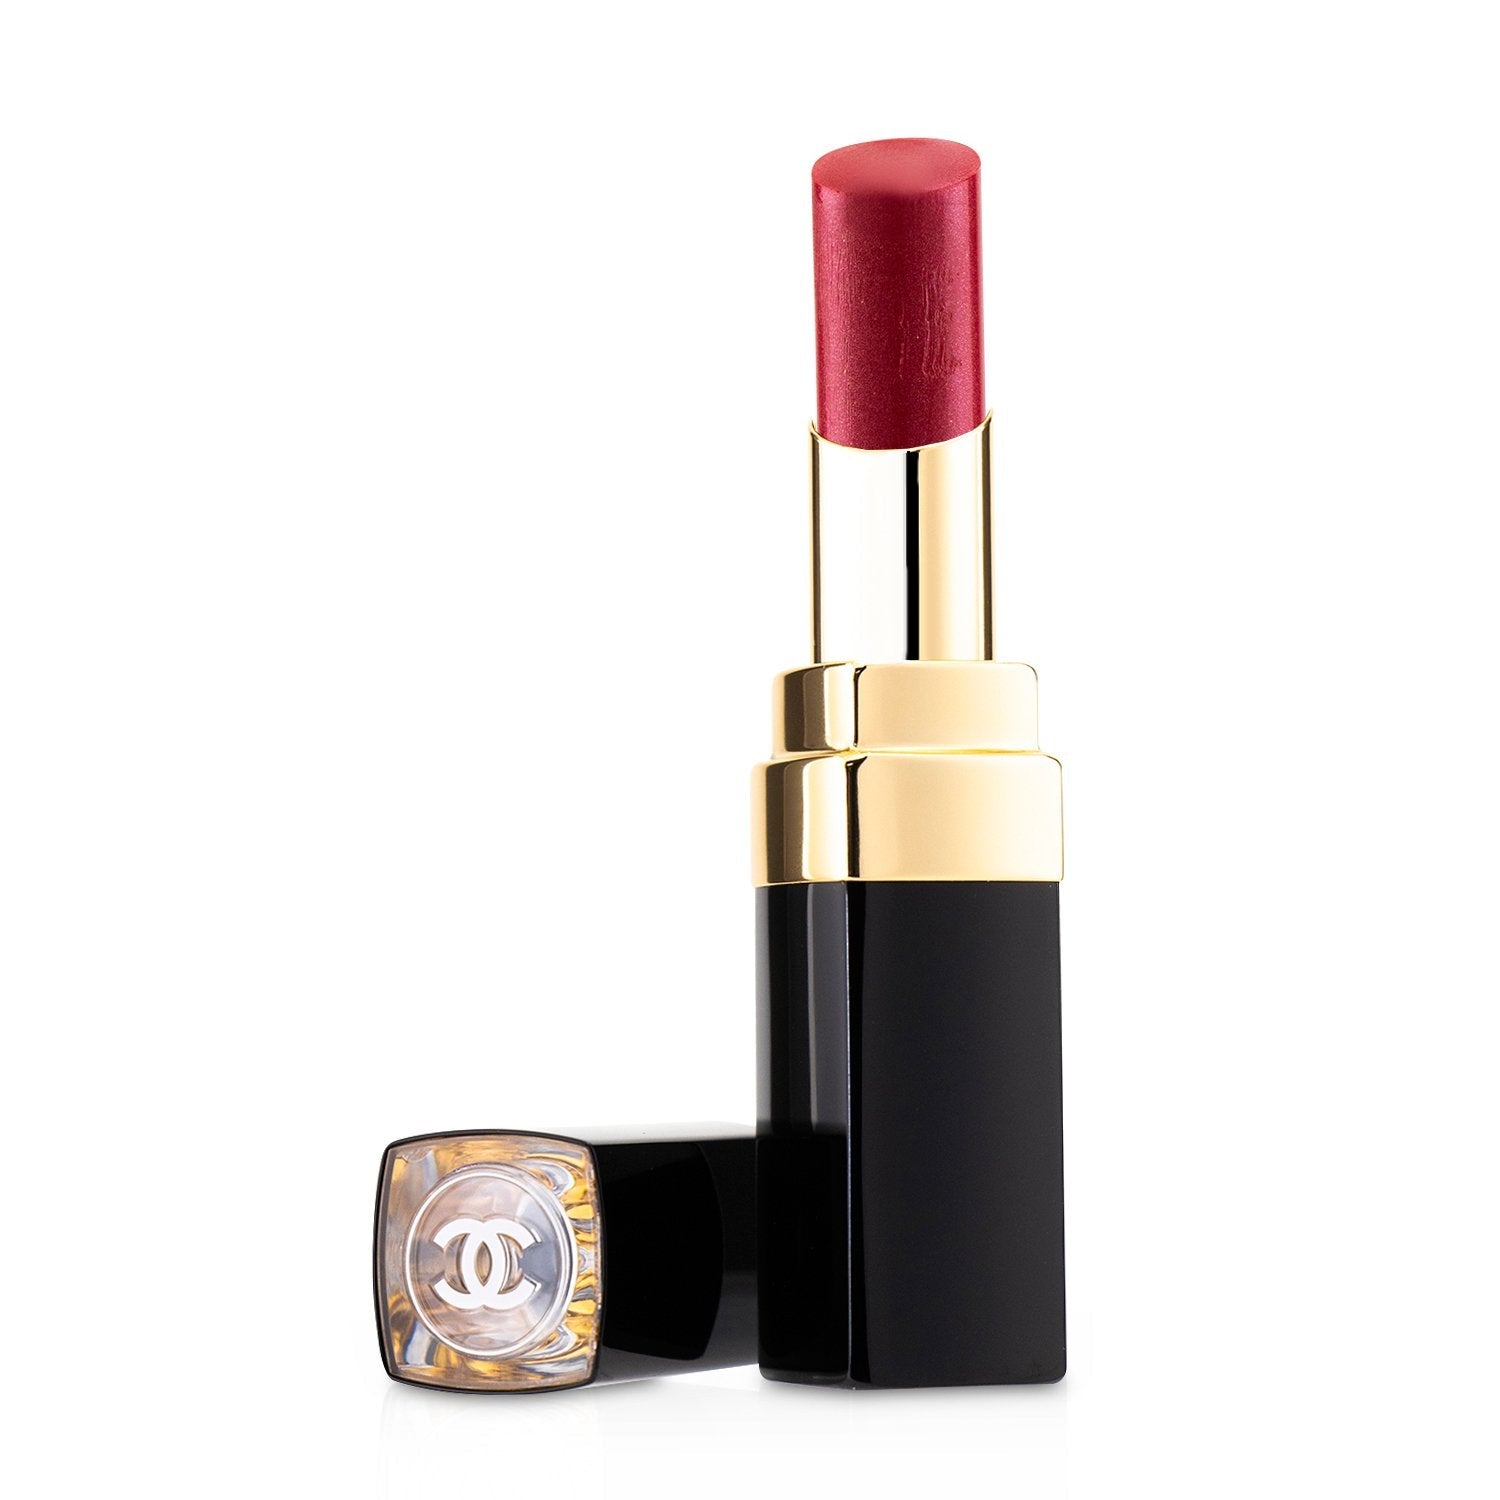 Chanel Rouge Coco Flash Hydrating Vibrant Shine Lip Colour - # 78